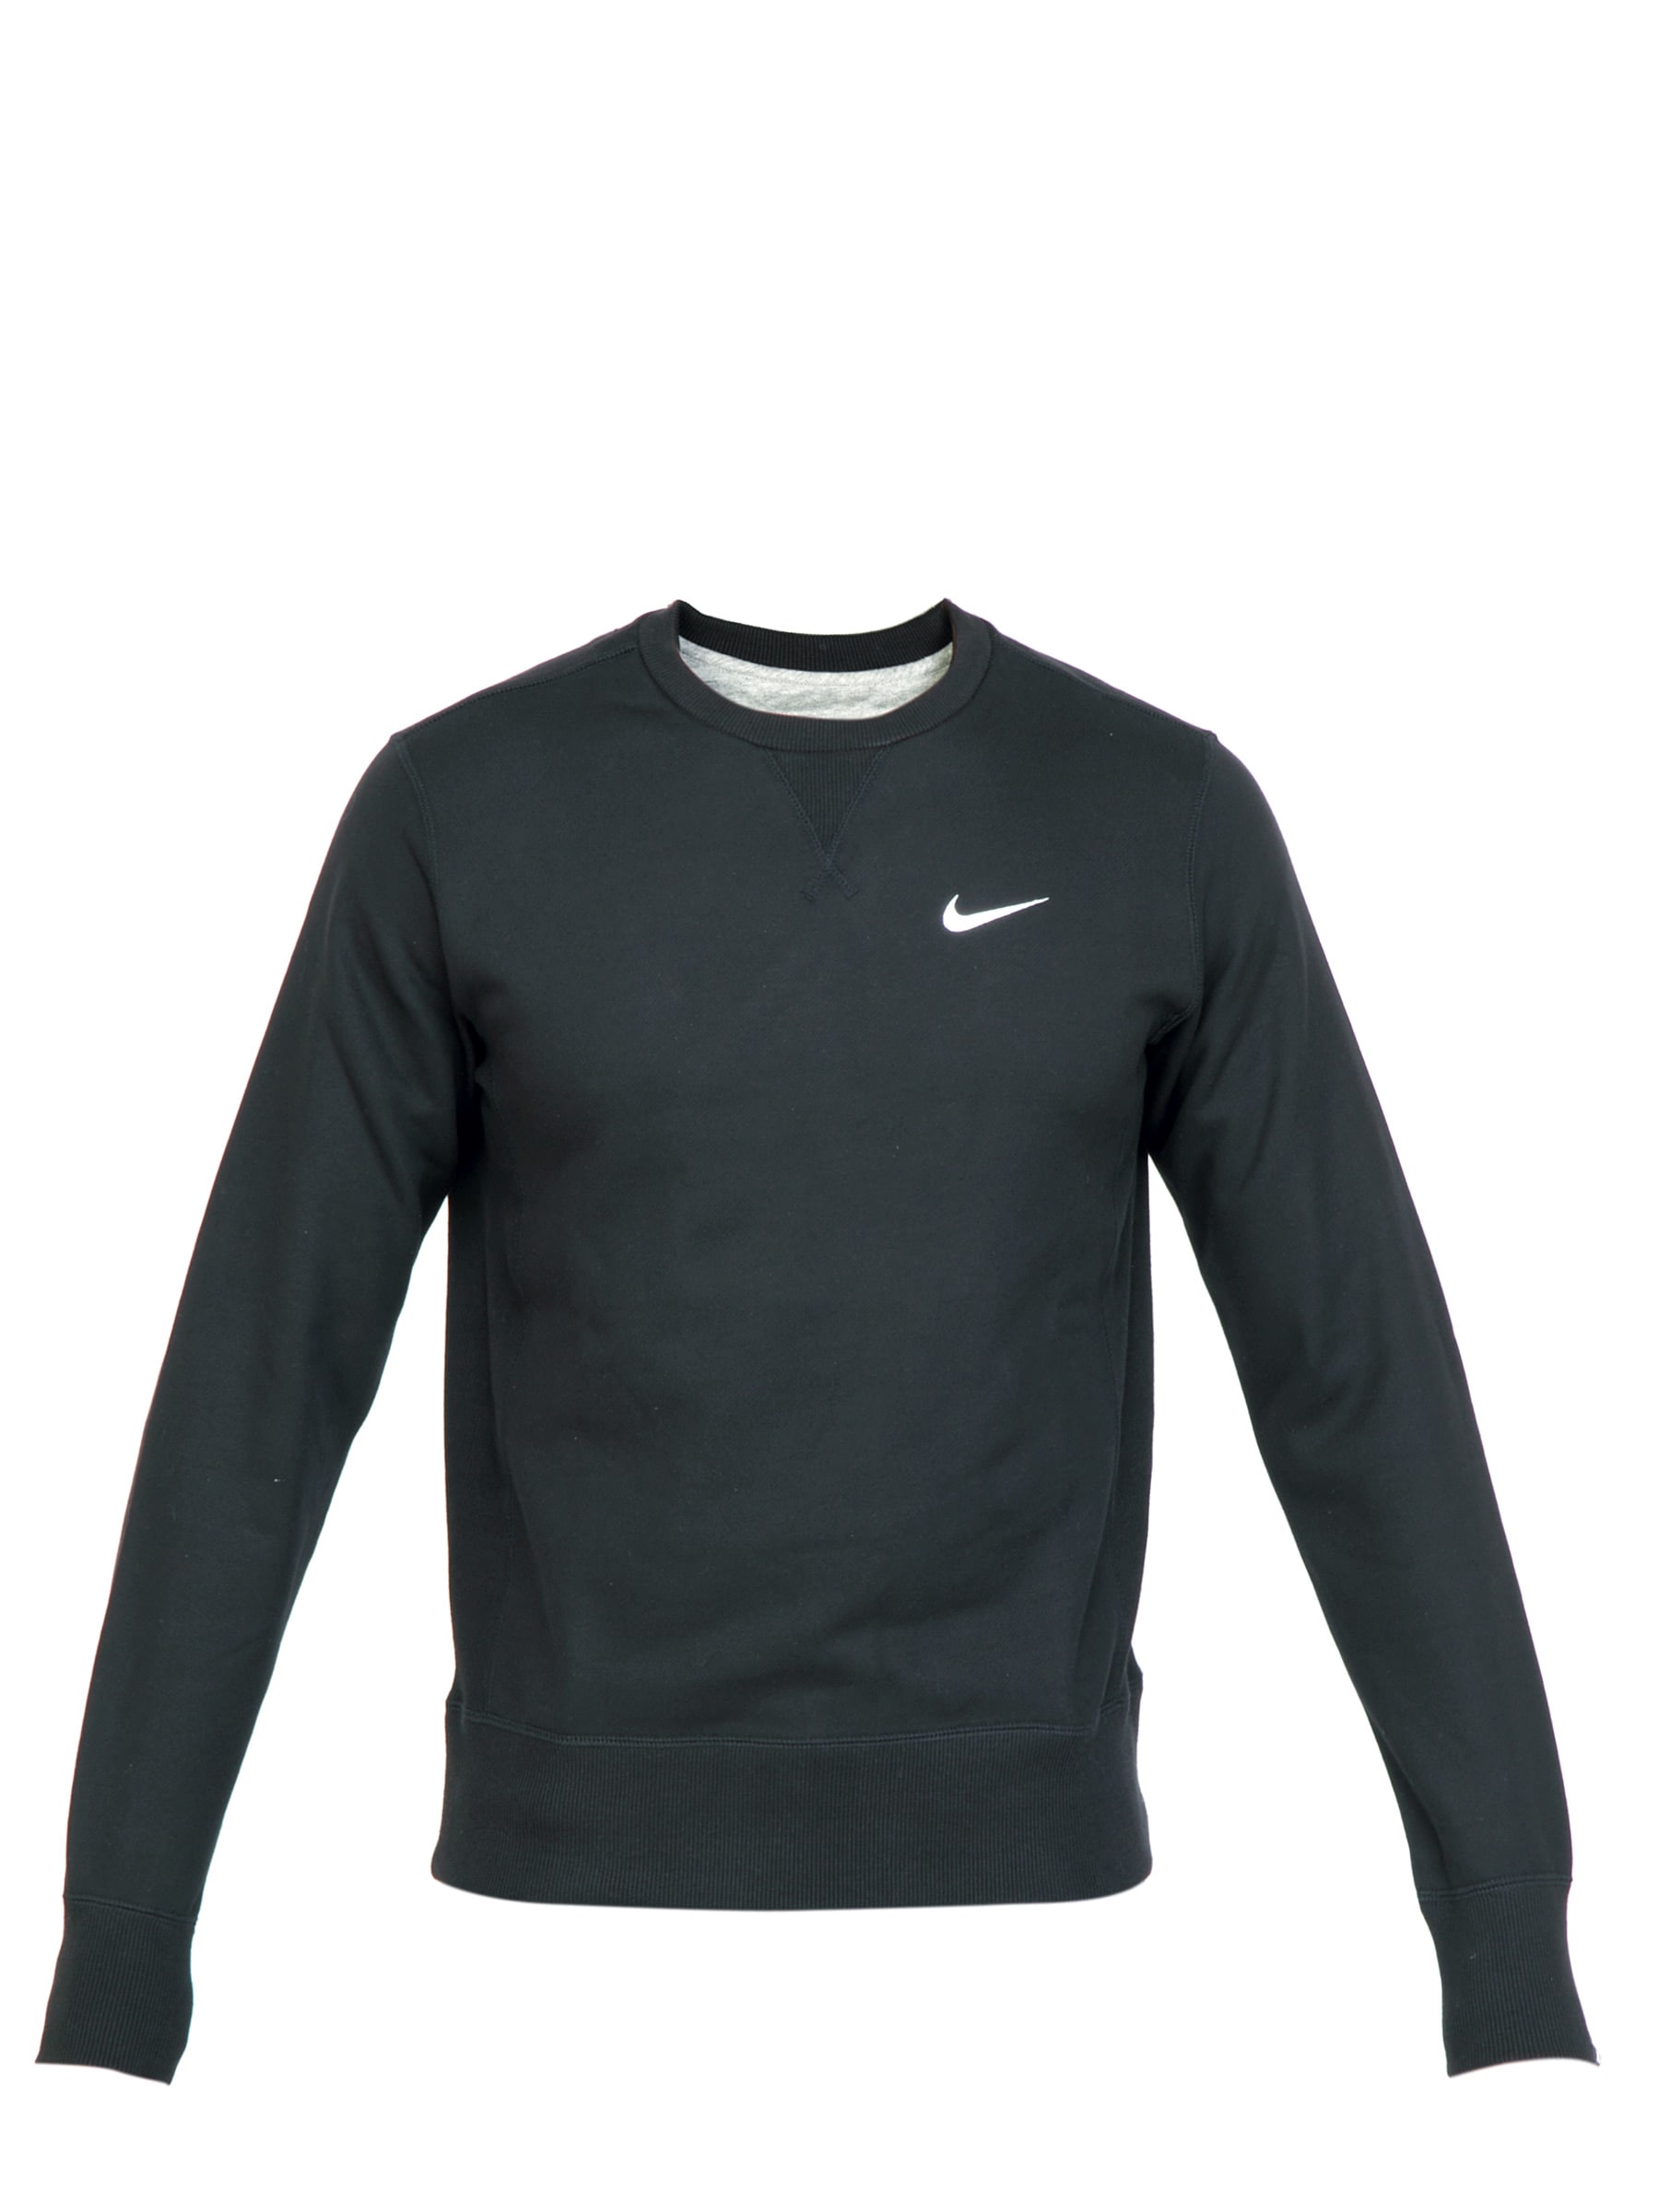 Nike Men Casual Black Sweatshirts